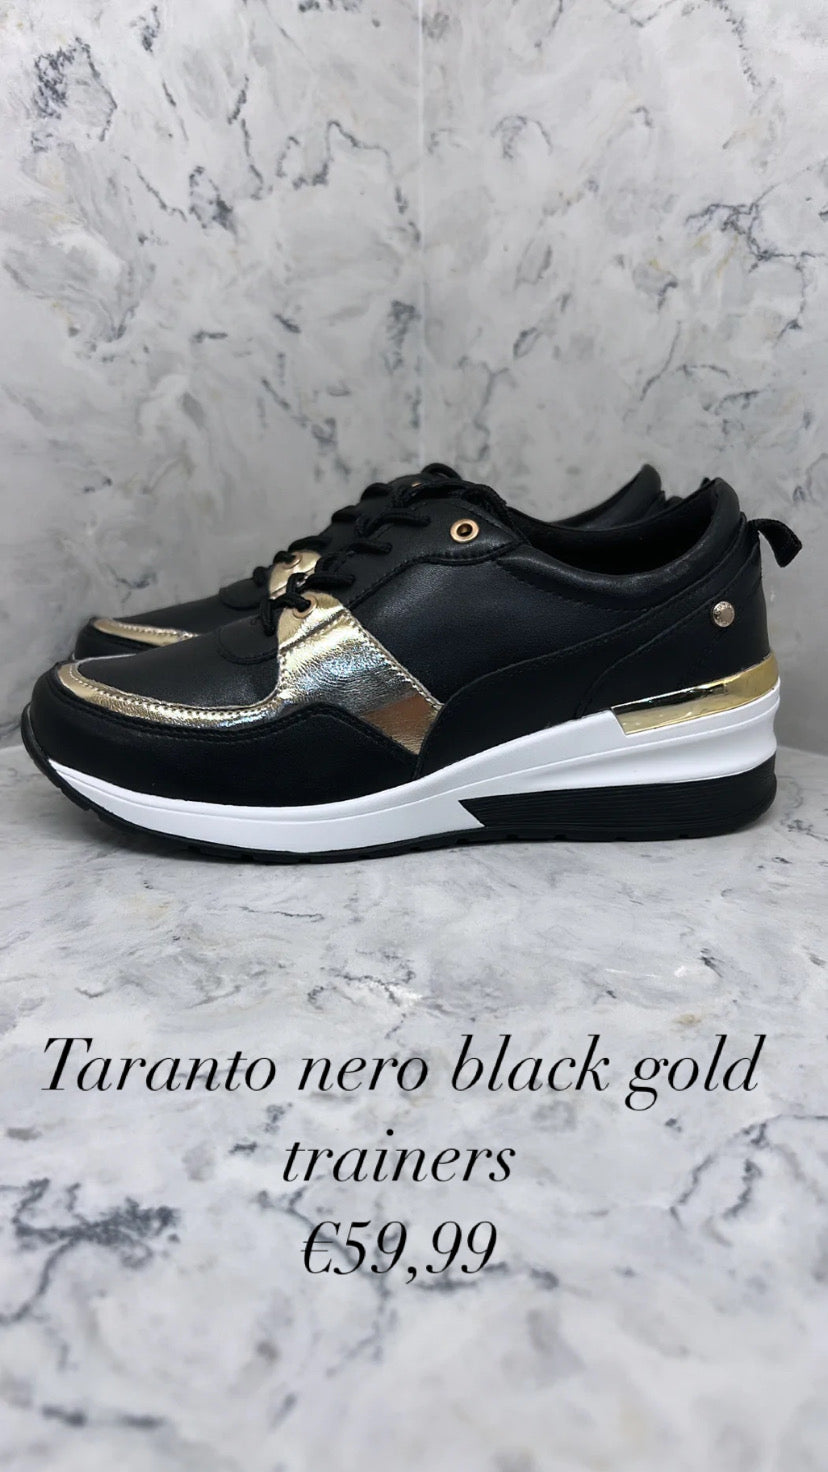 Taranto nero black gold trainers